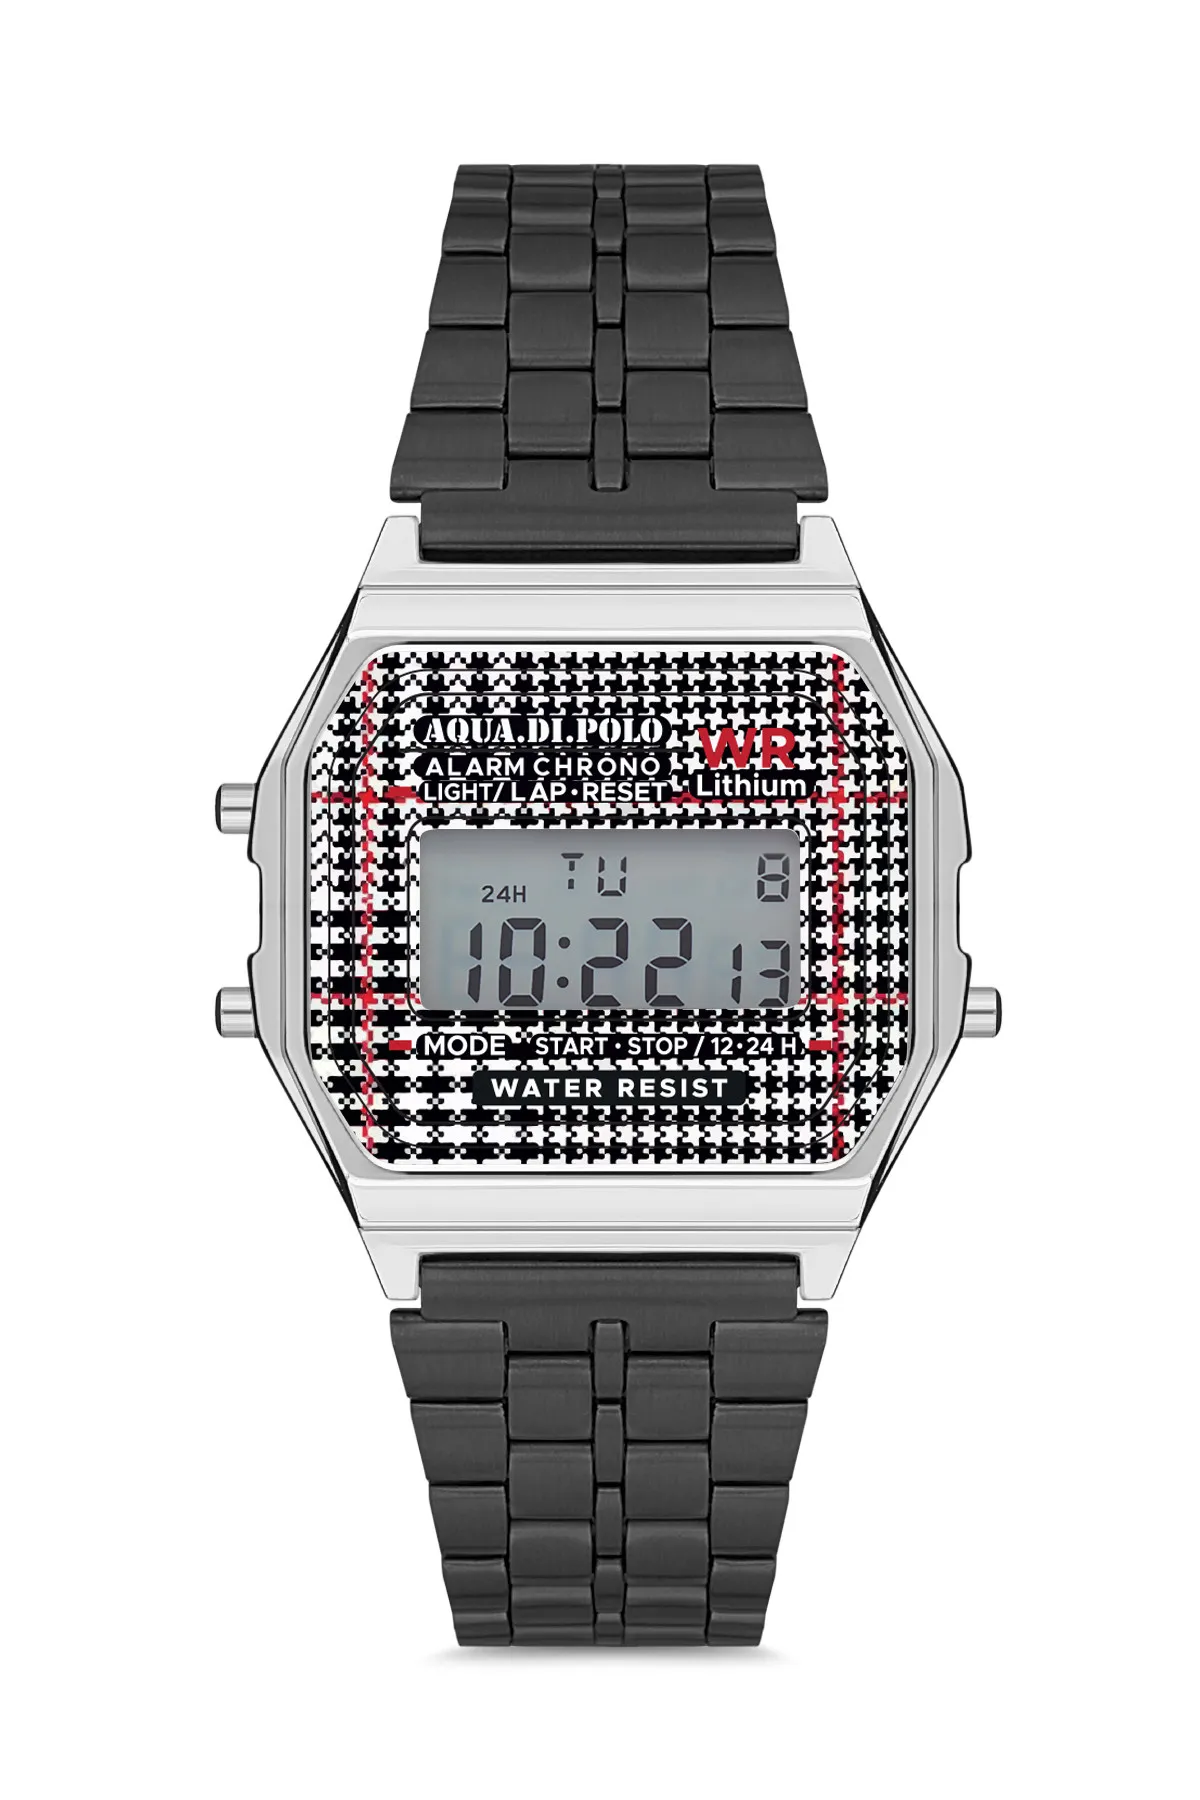 Наручные часы (унисекс) в стиле ретро Di Polo apwa034201#1